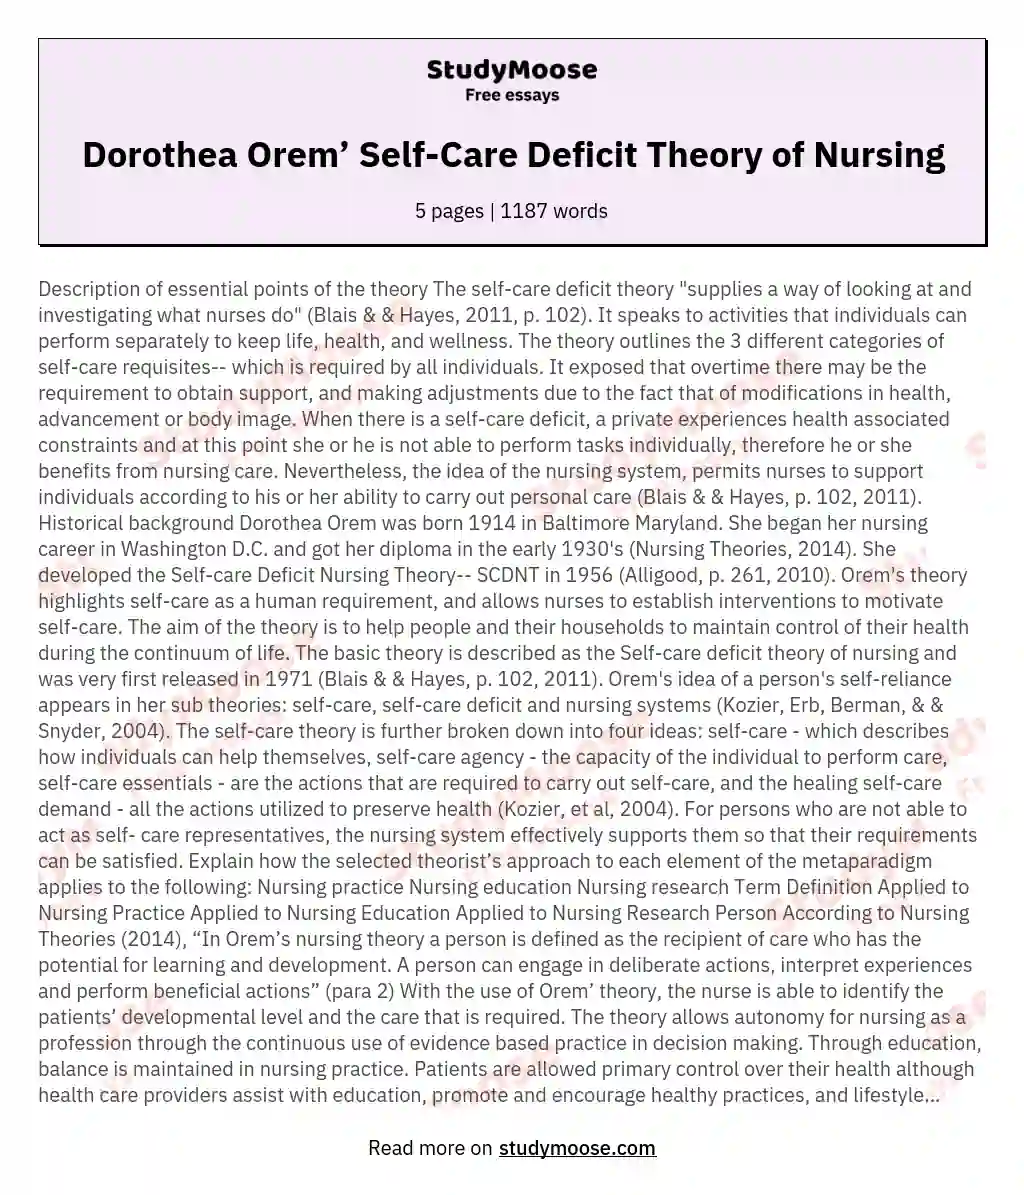 Dorothea Orem’ Self-Care Deficit Theory of Nursing